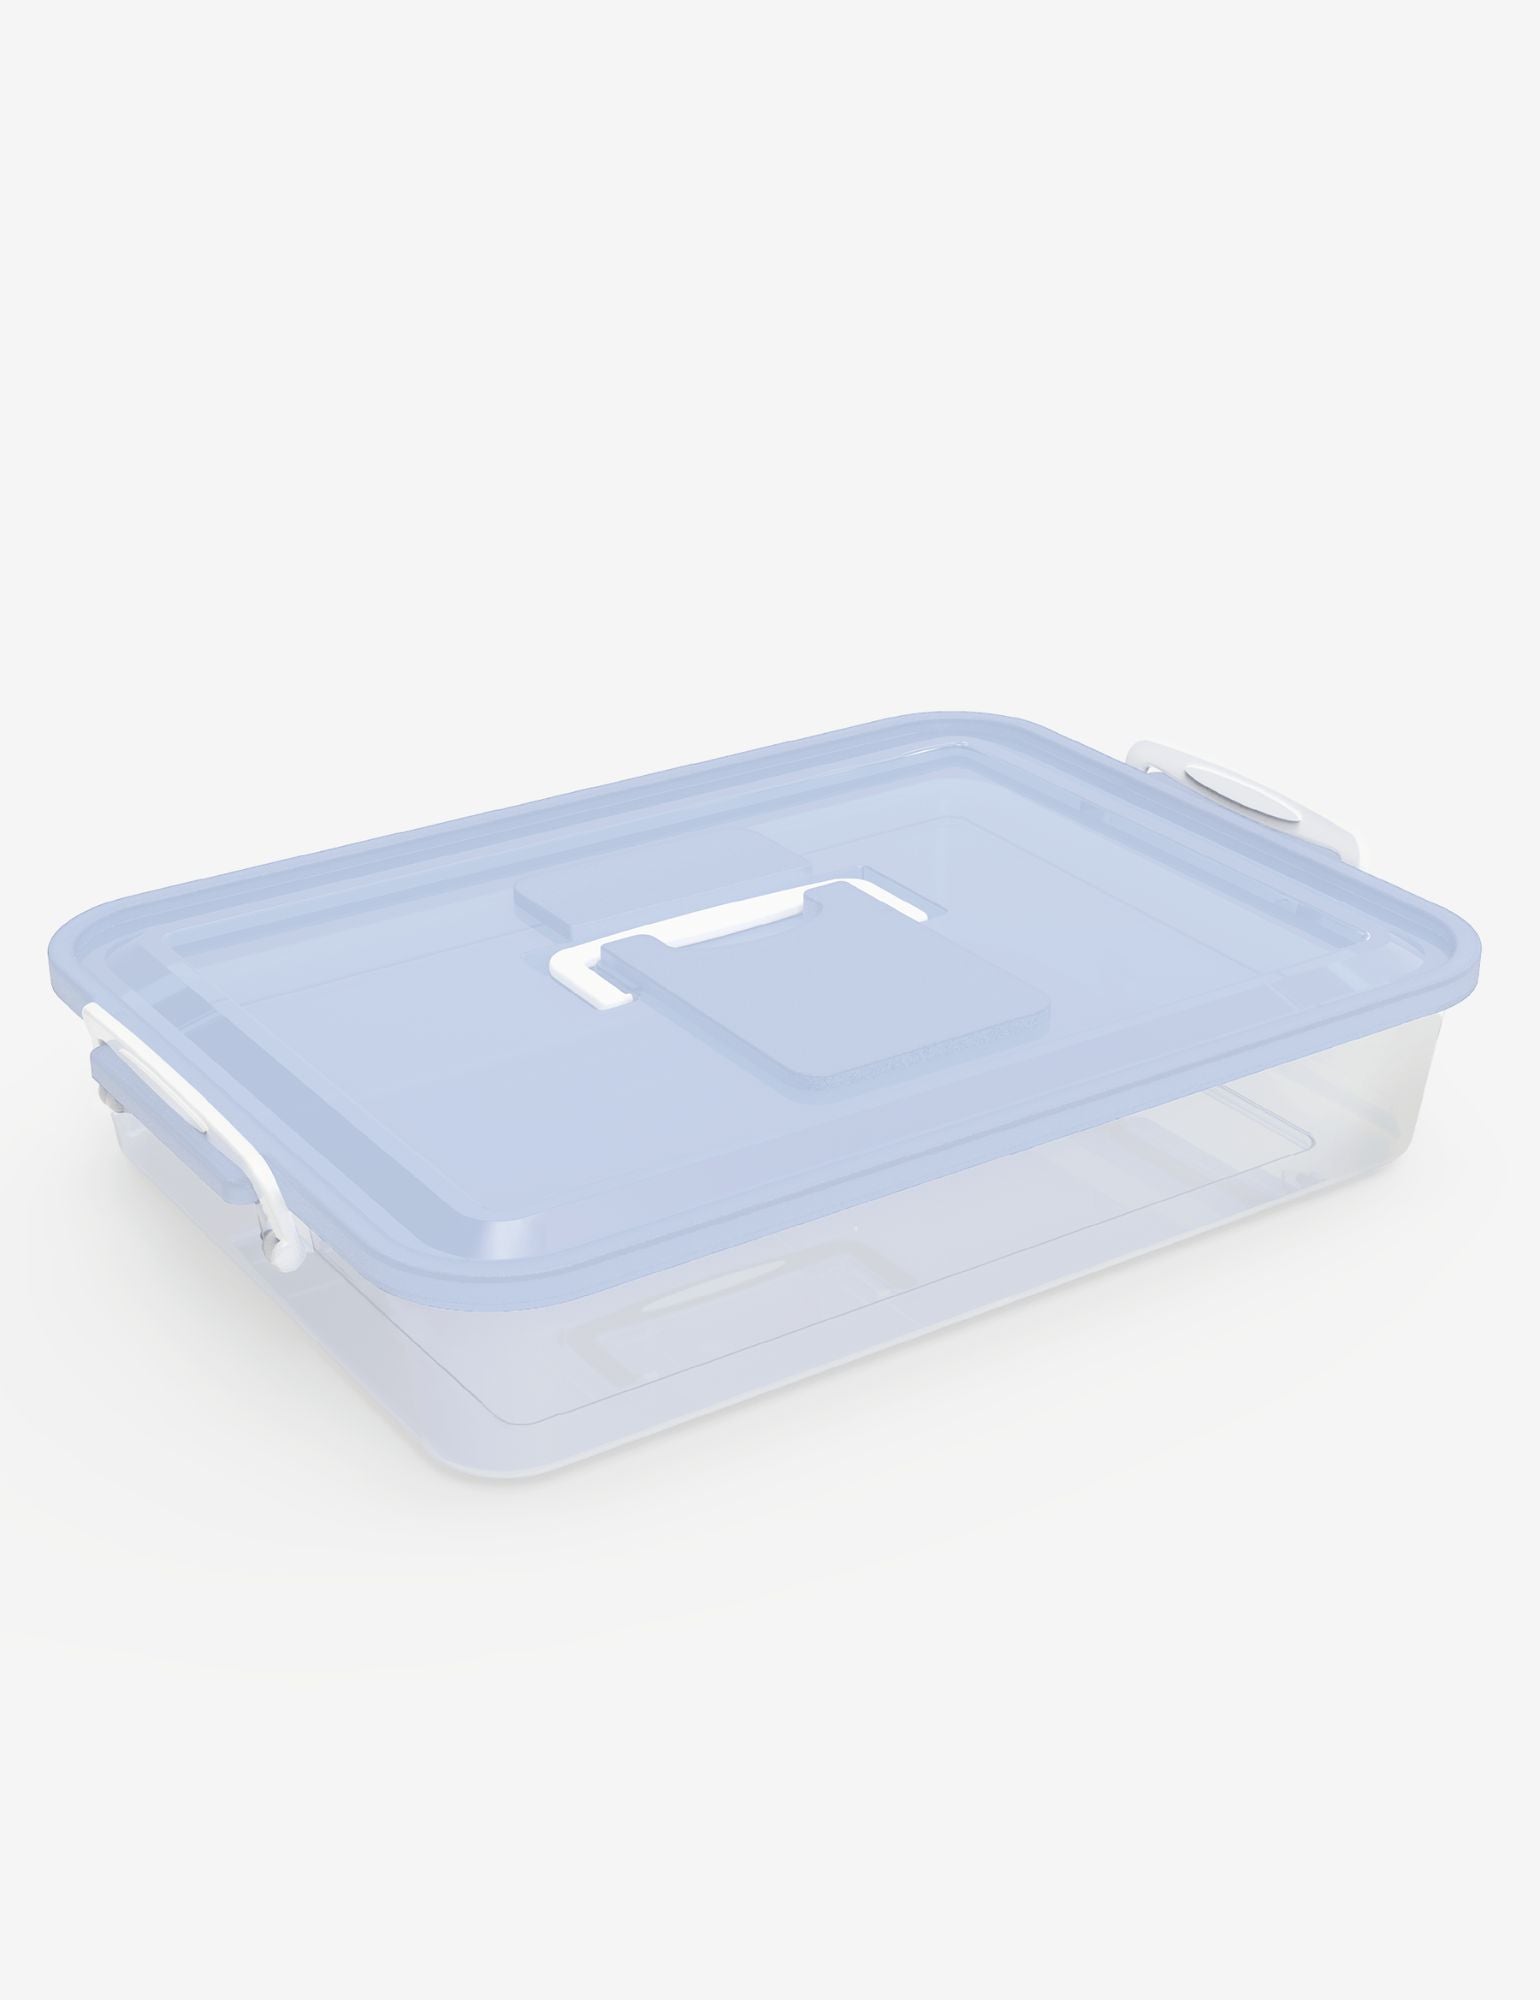 Dough Proofing Box, 14 x 11-Inch, Fit 4-6 Dough Balls (Blue)